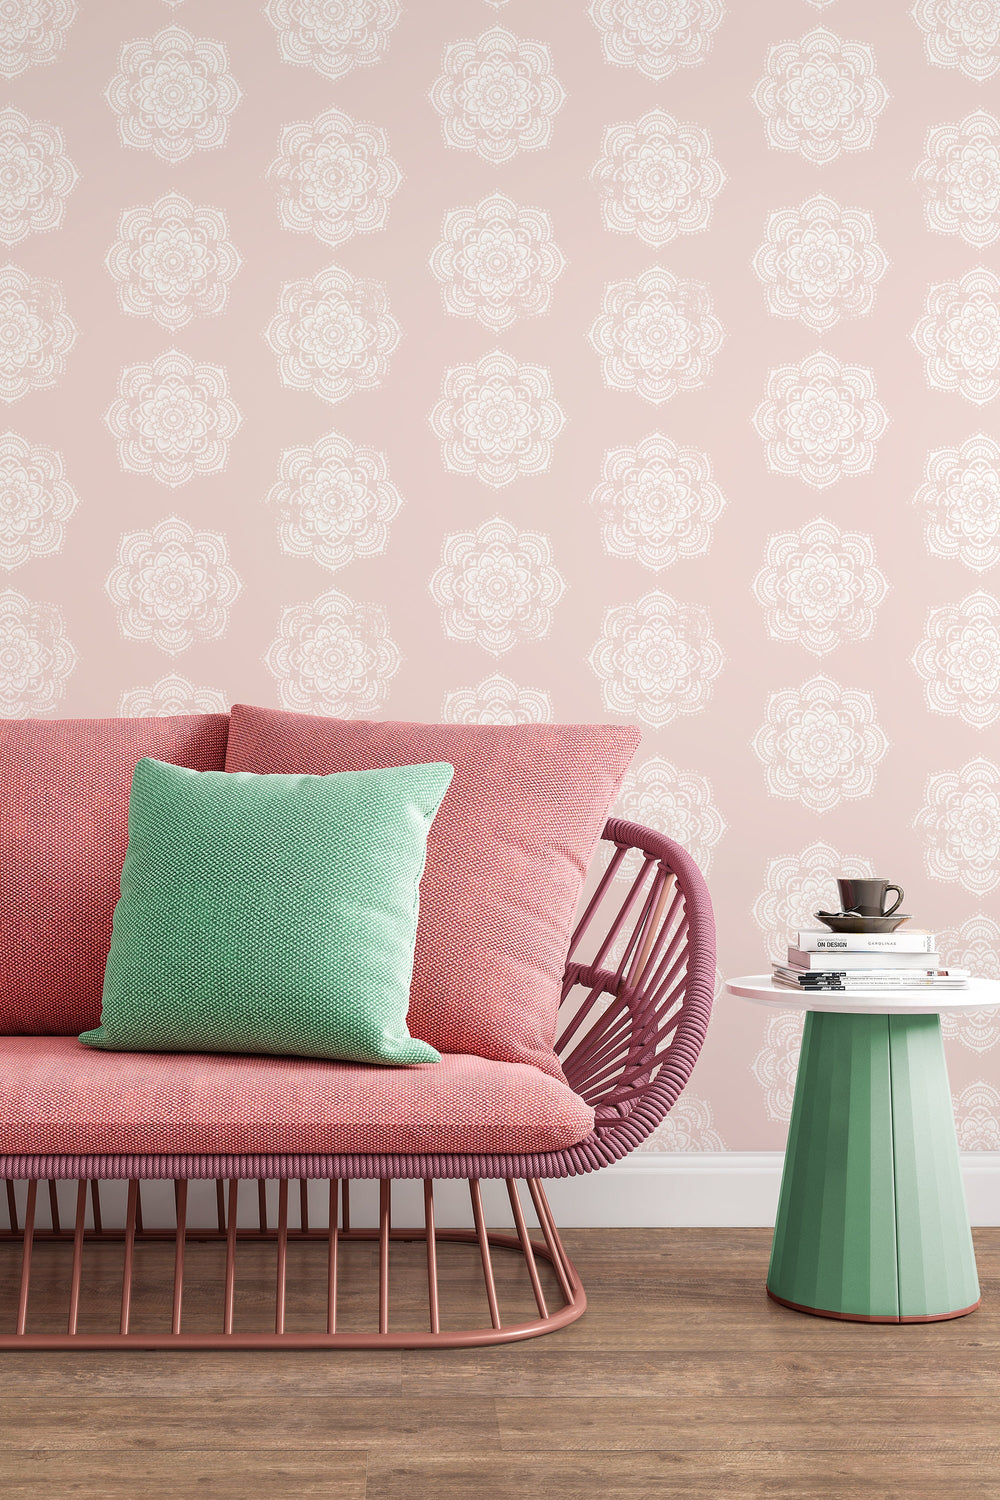 BOHO Design Wallcovering - Canvas Peel & Stick Wallpaper - Removable Self Adhesive Wallpaper pattern wallpaper design #3157